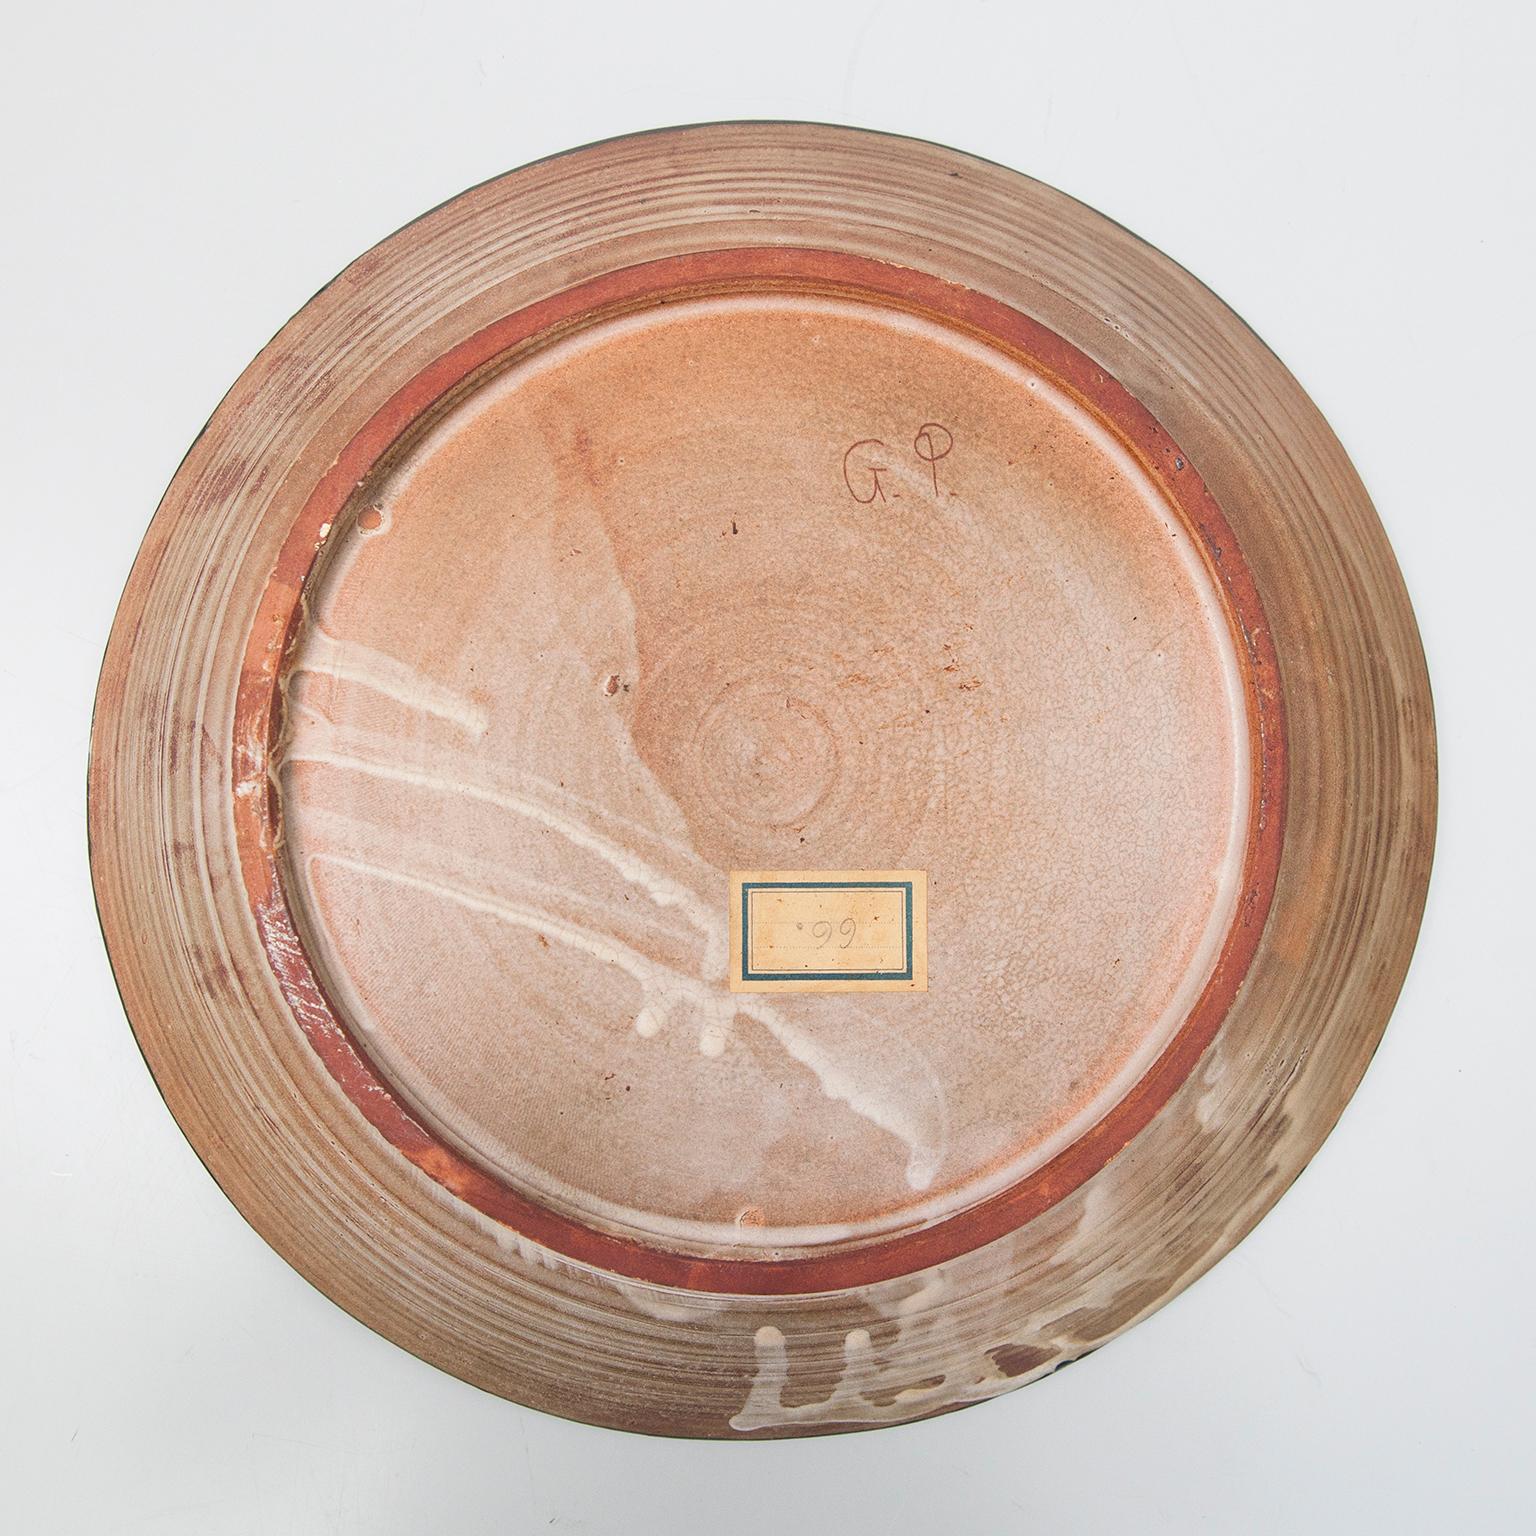 Ceramic Gilbert Portanier Unique Art Pottery Plate Signed 1966